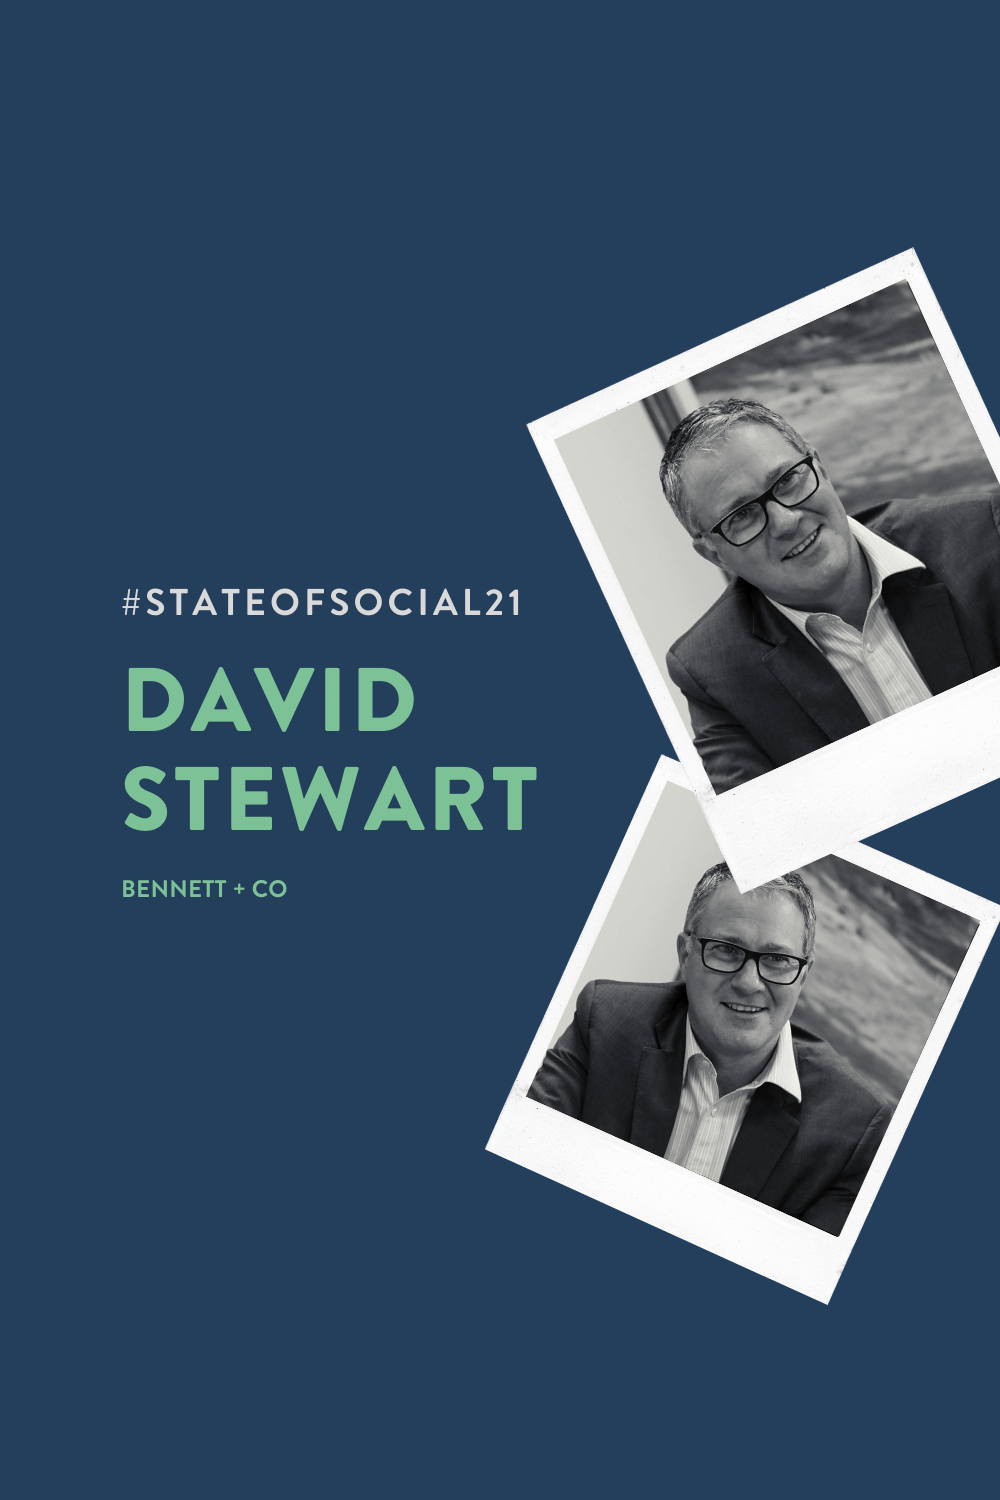 Bennett+Co’s Dave Stewart is demystifying deepfakes at SOS21